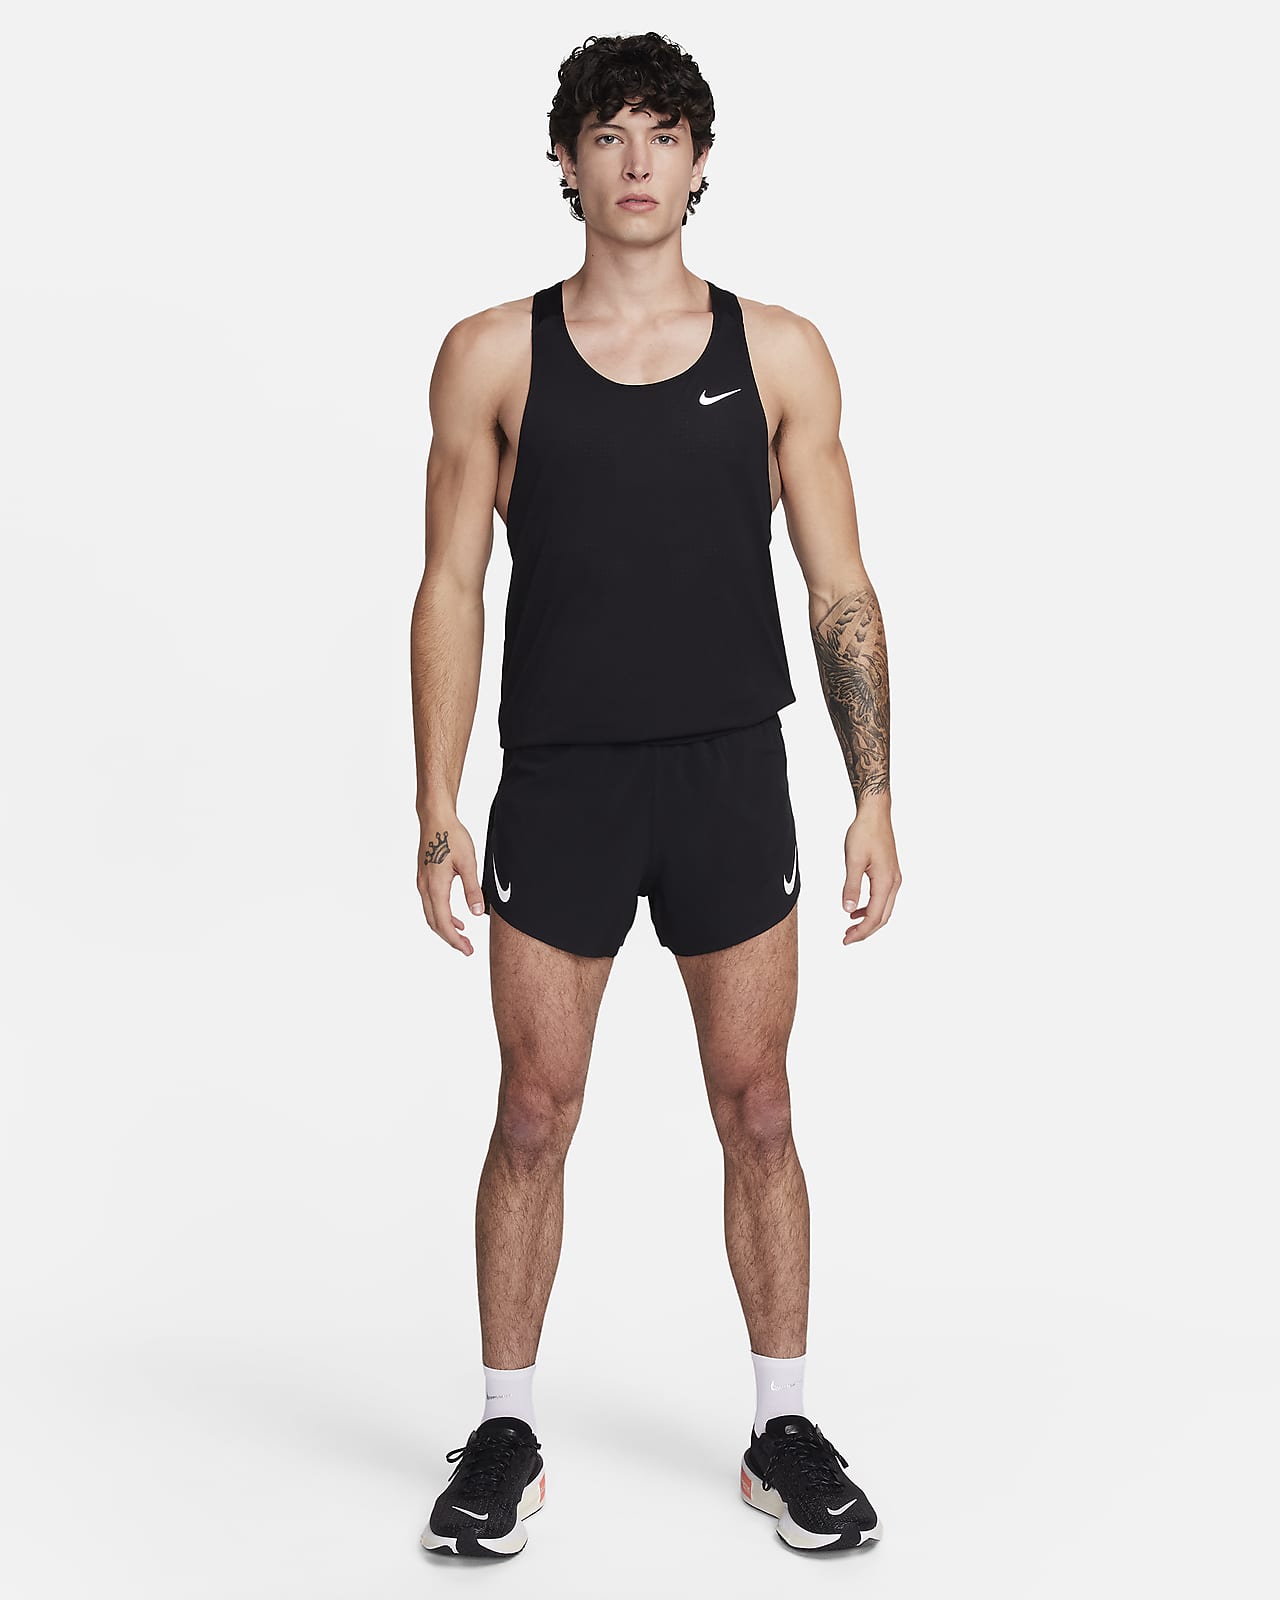 NIKE Nike AeroSwift Men's 4 Running Shorts